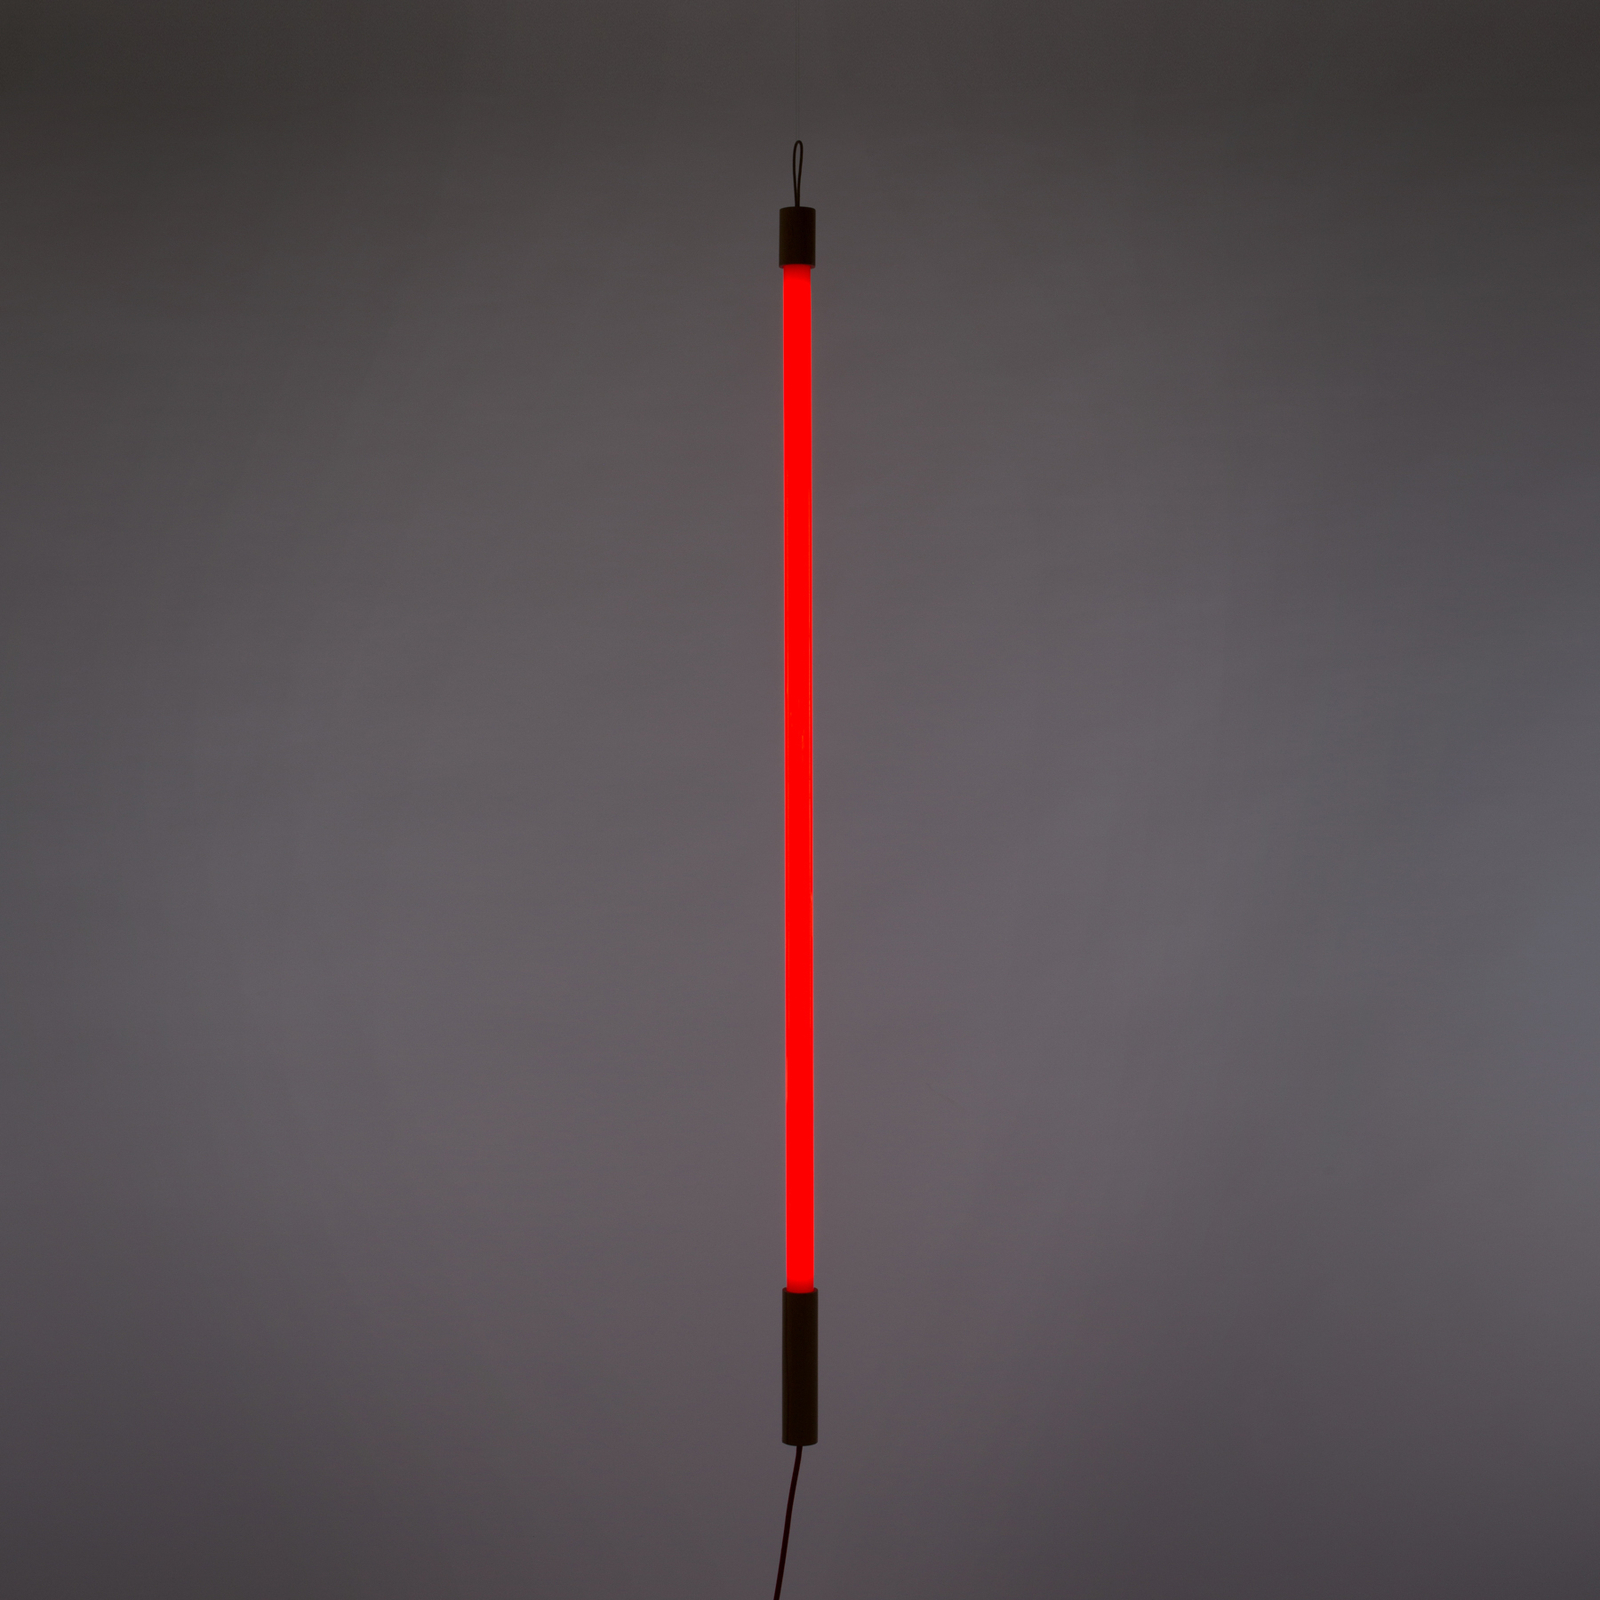 SELETTI LED-Leuchte Linea, rot, Holzdetails, universal